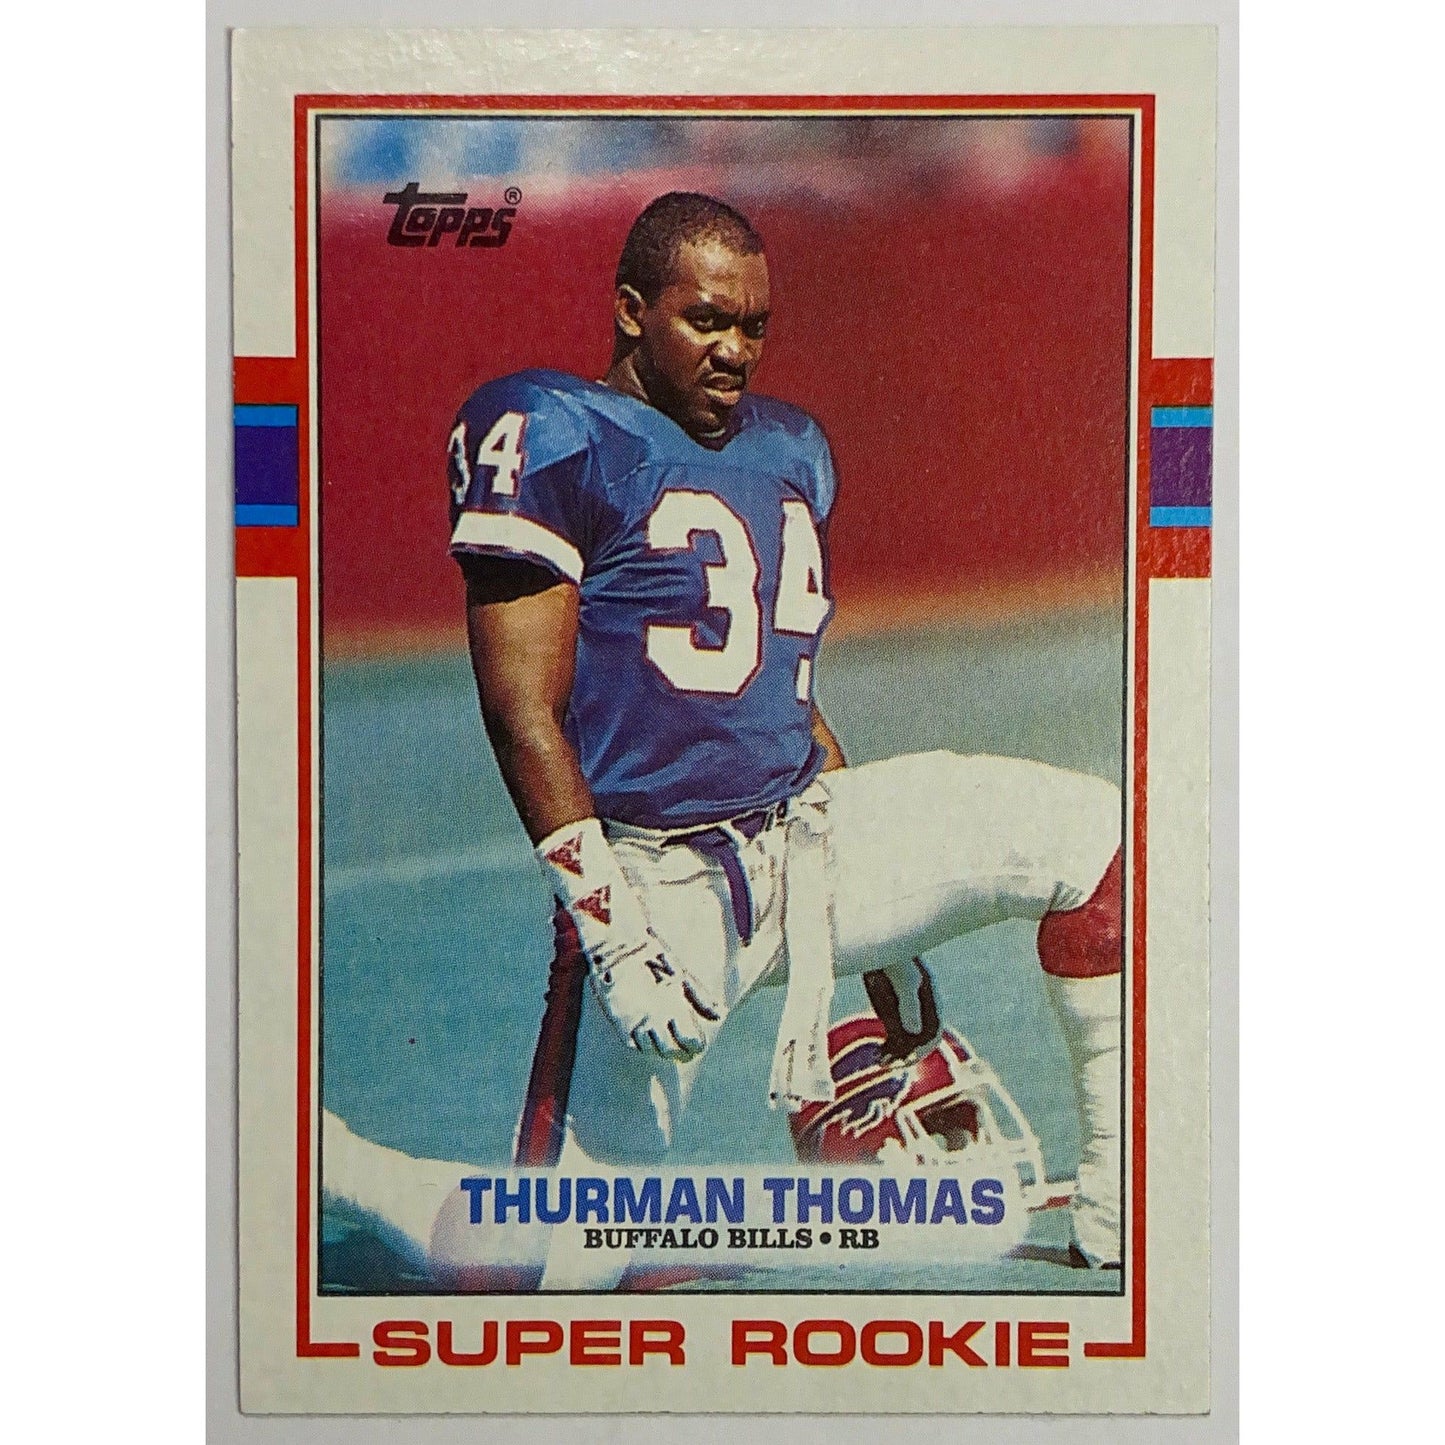 1989 Topps NFL Thurman Thomas Super Rookie #45